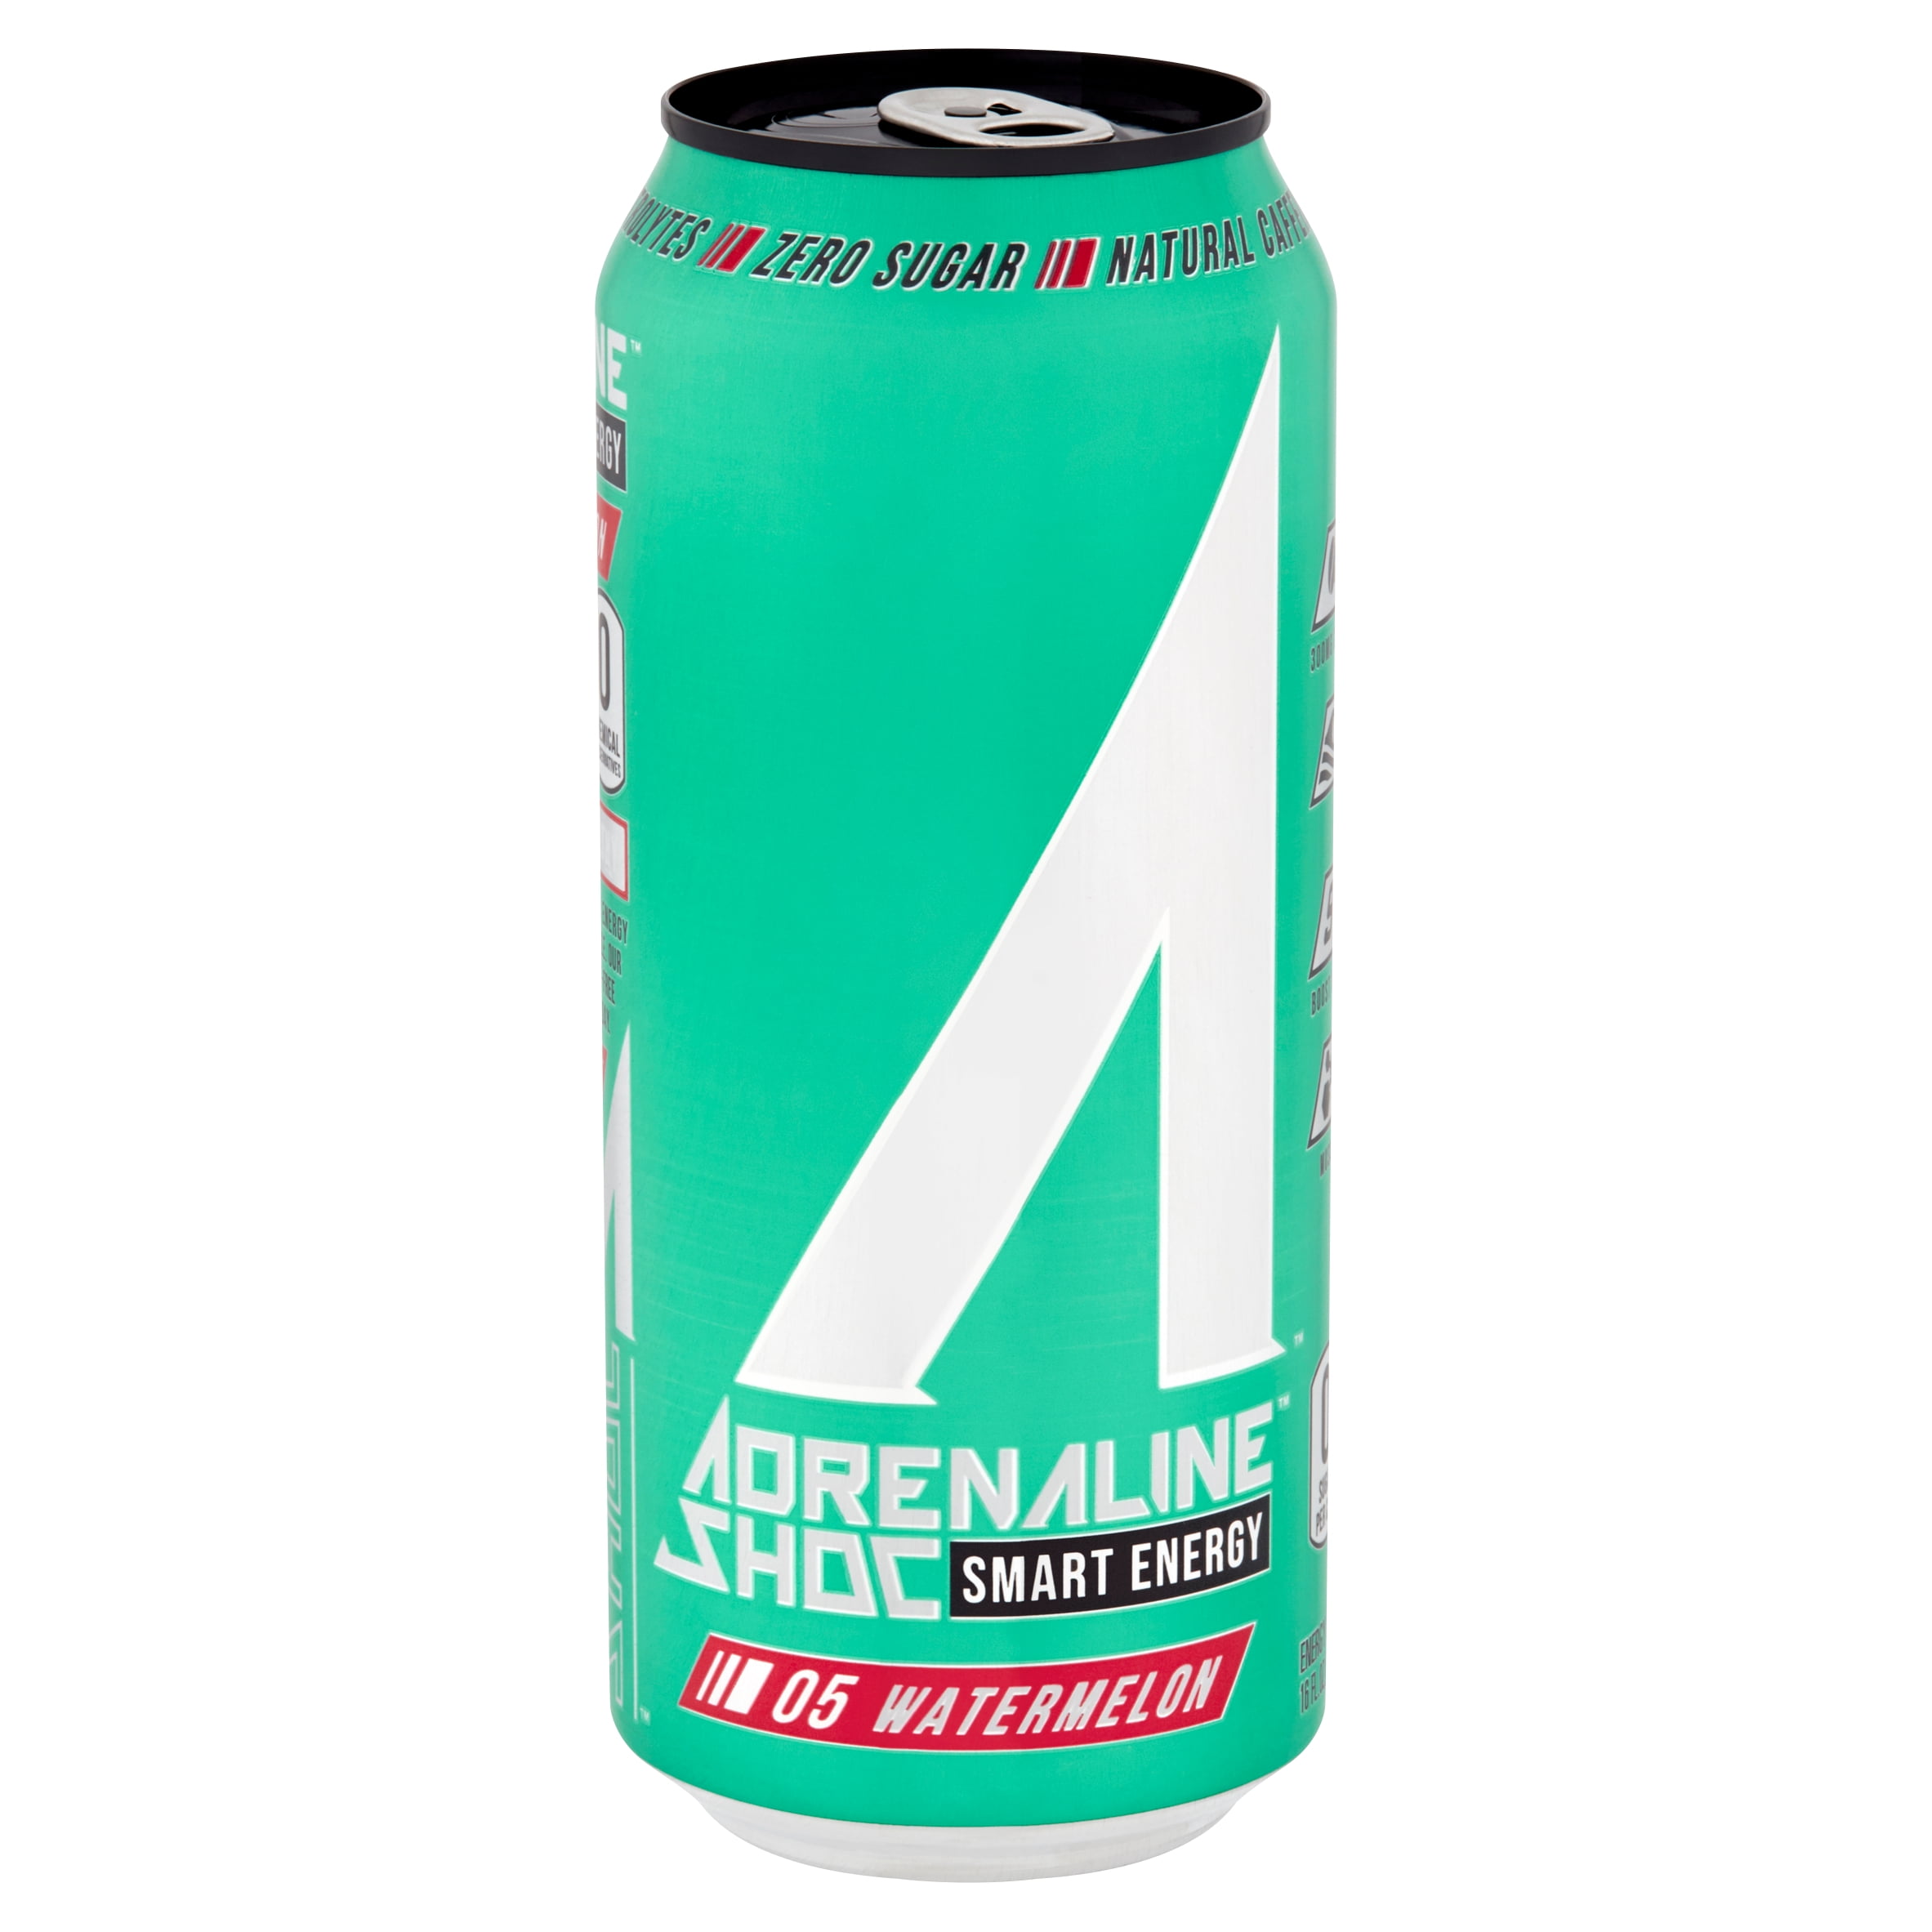 Adrenaline Shoc 05 Watermelon Smart Energy Drink, 16 Fl Oz - Walmart.com